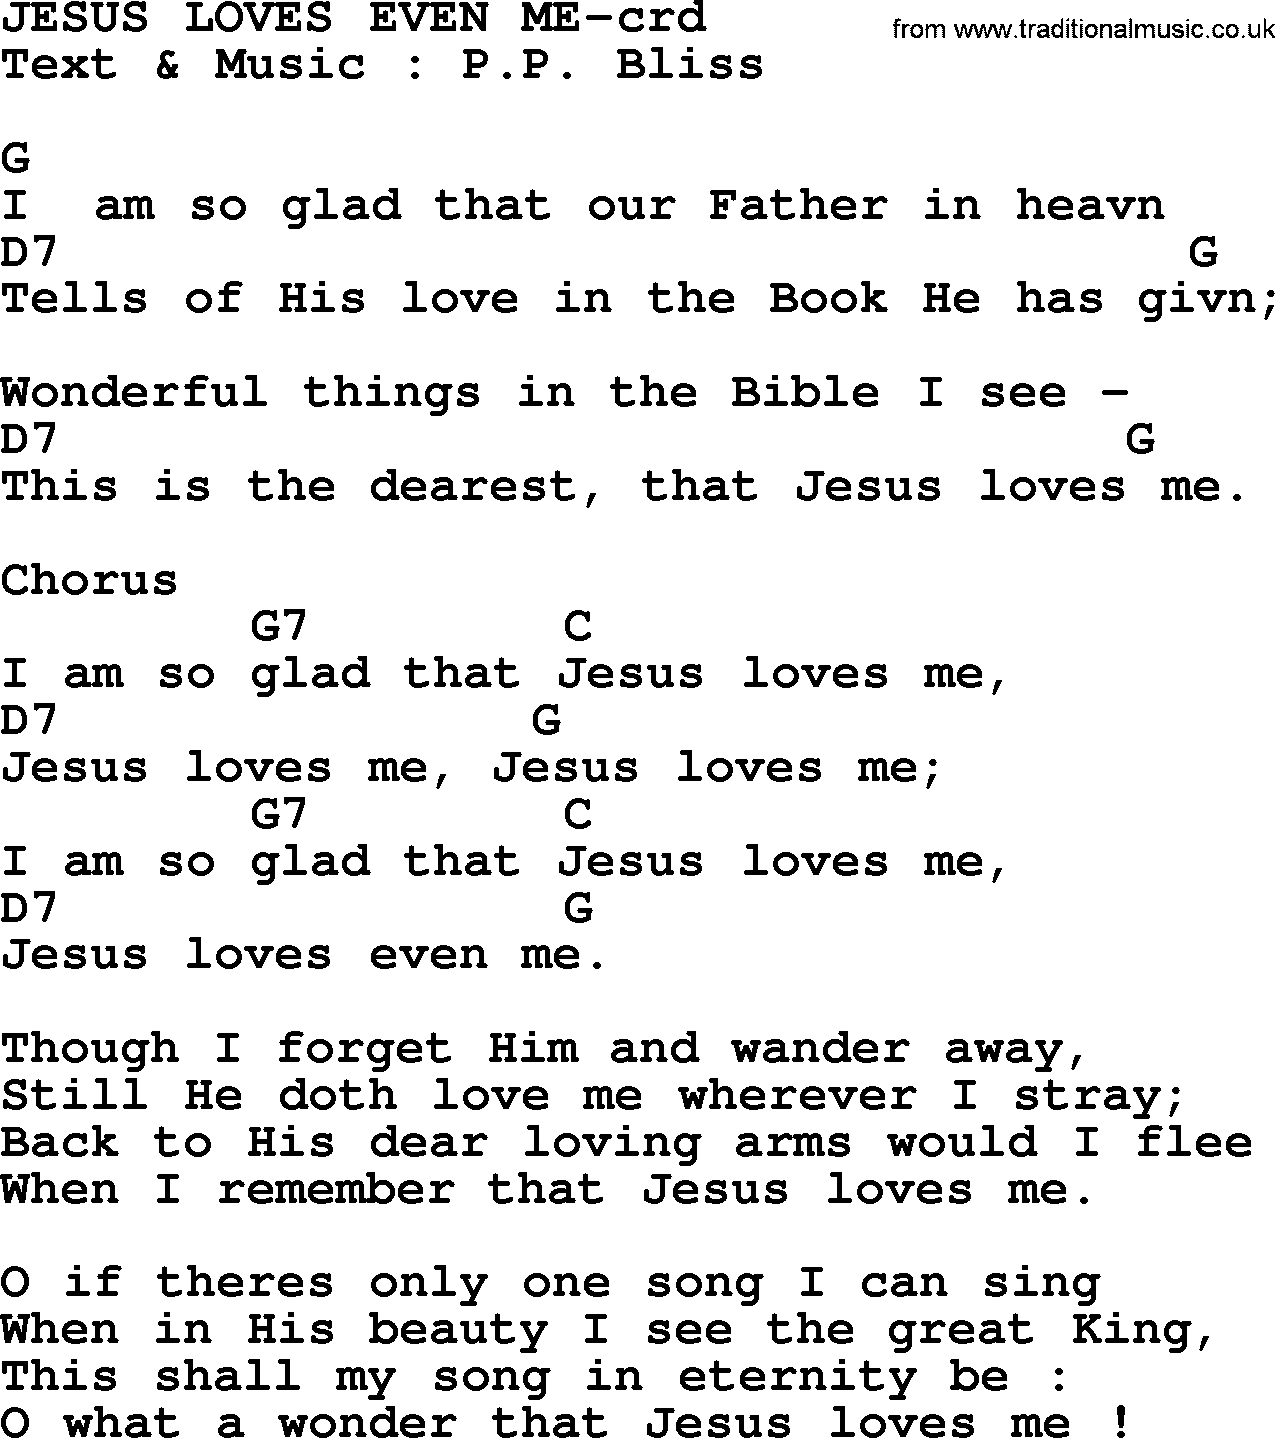 Top 500 Hymn: Jesus Loves Even Me, lyrics and chords